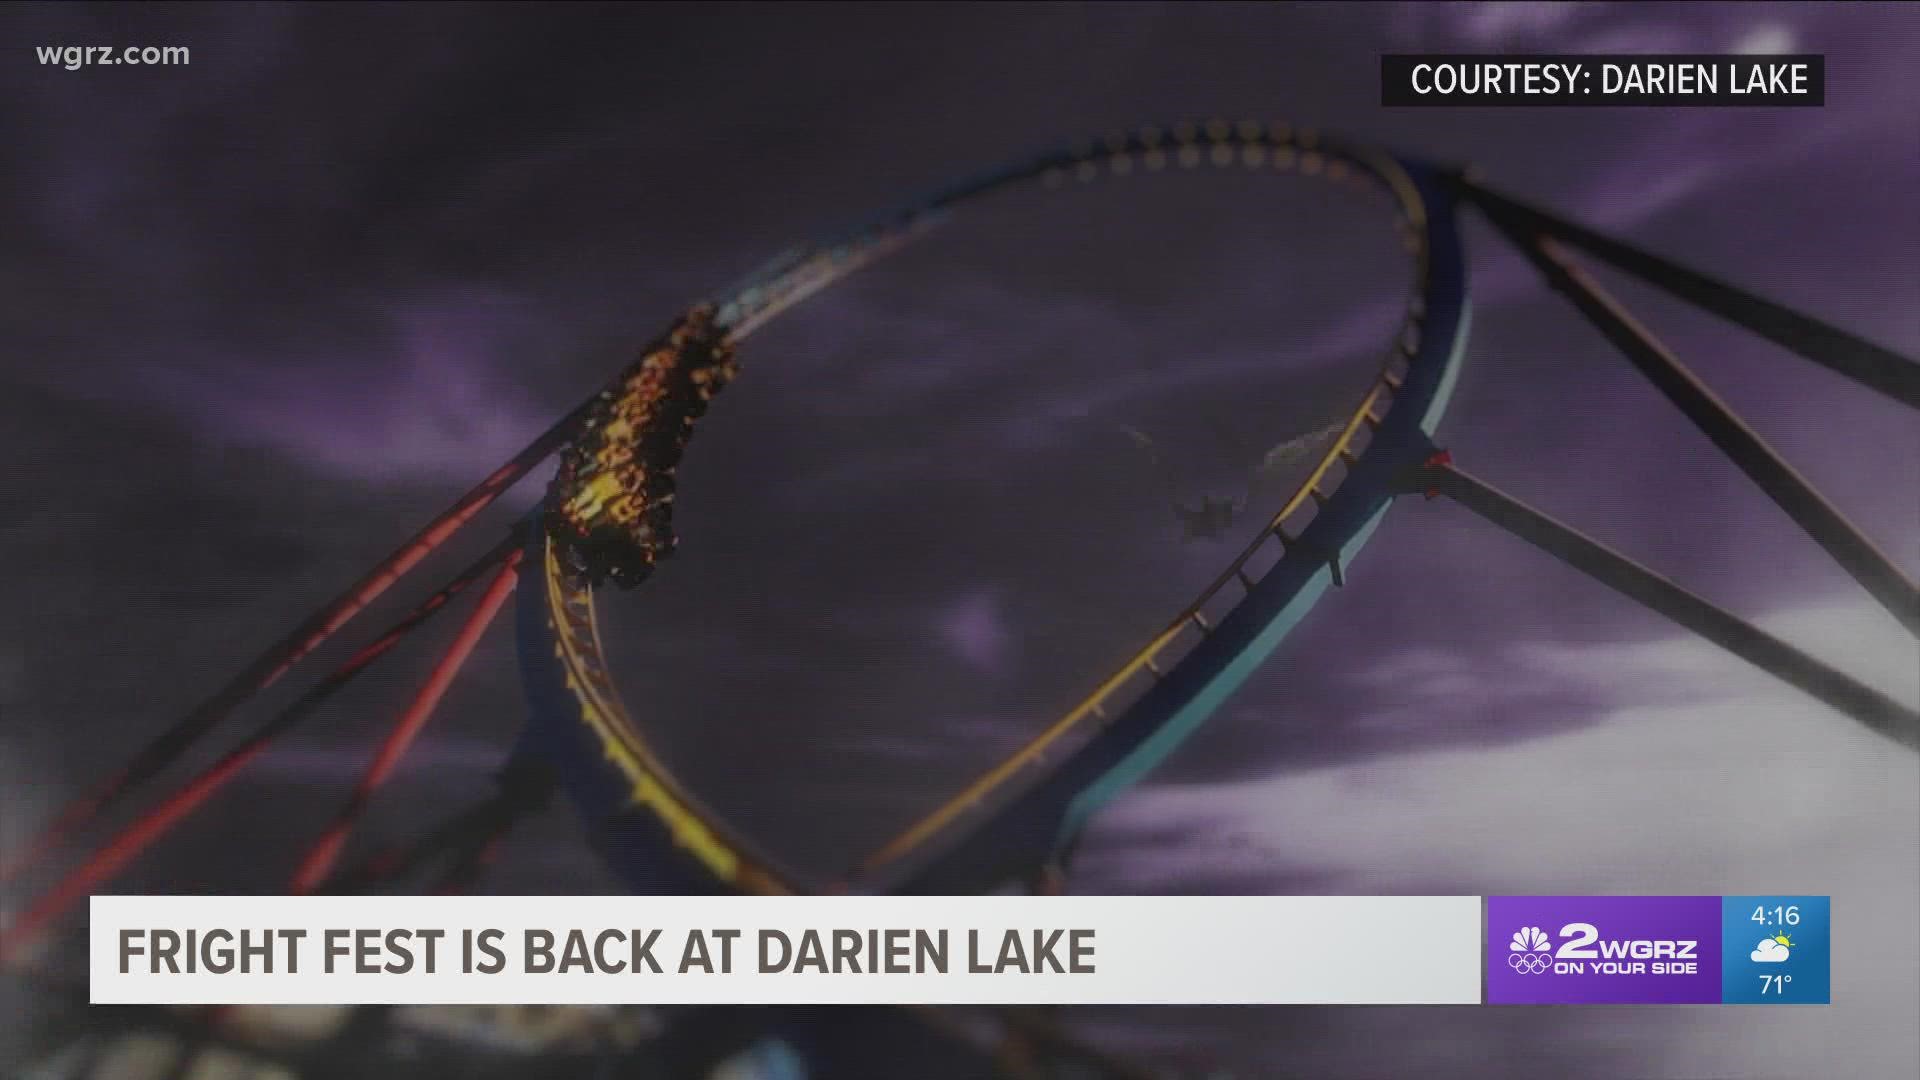 Six Flags Darien Lake announces the return of Fright Fest